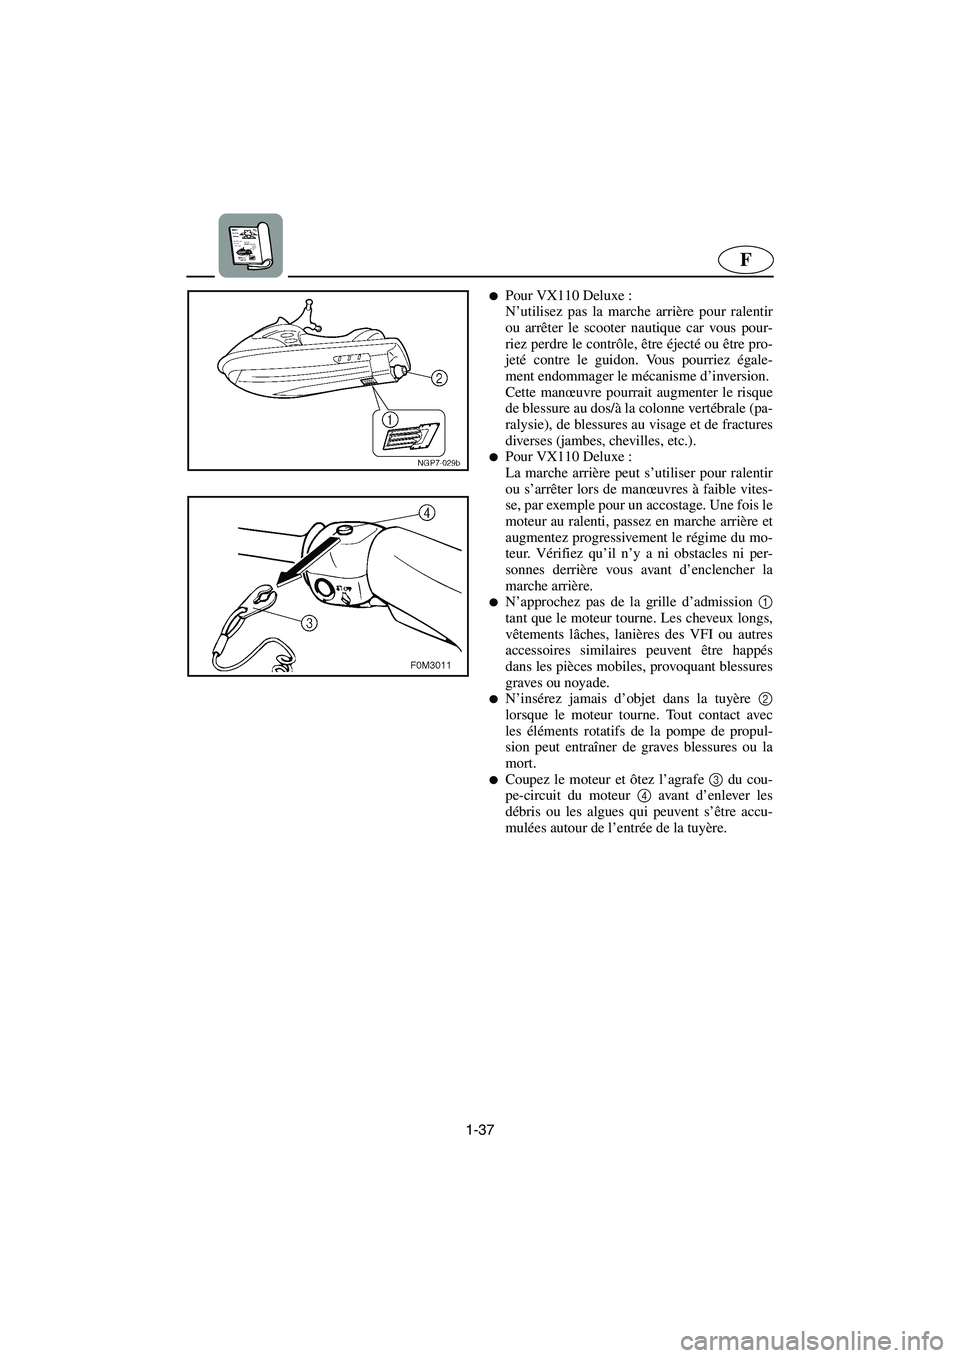 YAMAHA VX SPORT 2006  Manuale de Empleo (in Spanish) 1-37
F
Pour VX110 Deluxe : 
N’utilisez pas la marche arrière pour ralentir
ou arrêter le scooter nautique car vous pour-
riez perdre le contrôle, être éjecté ou être pro-
jeté contre le gui